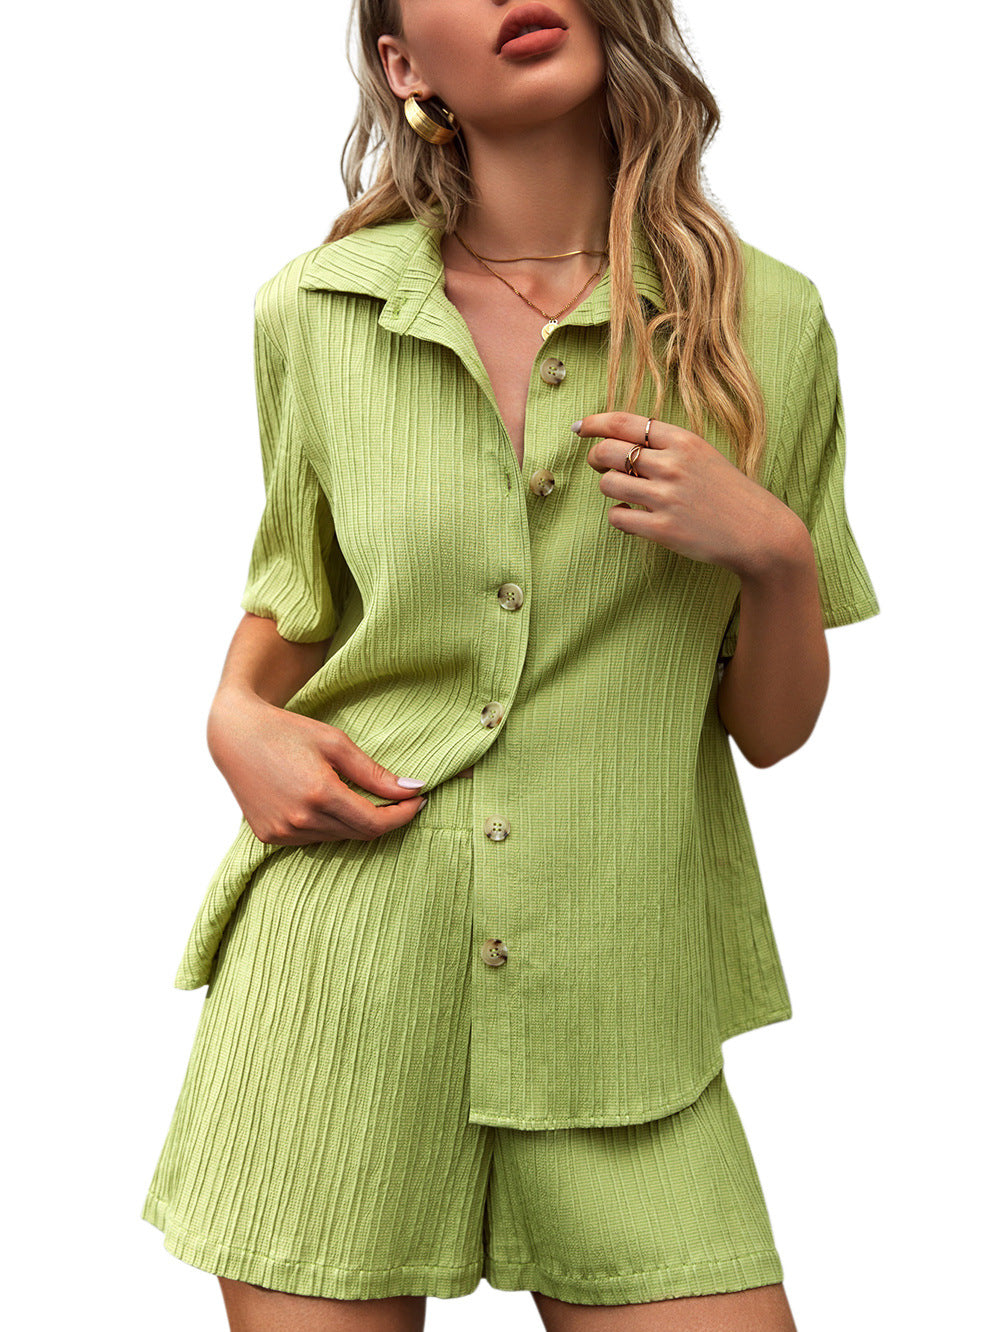 Summer Green Casual Tops & Shorts Women Suits